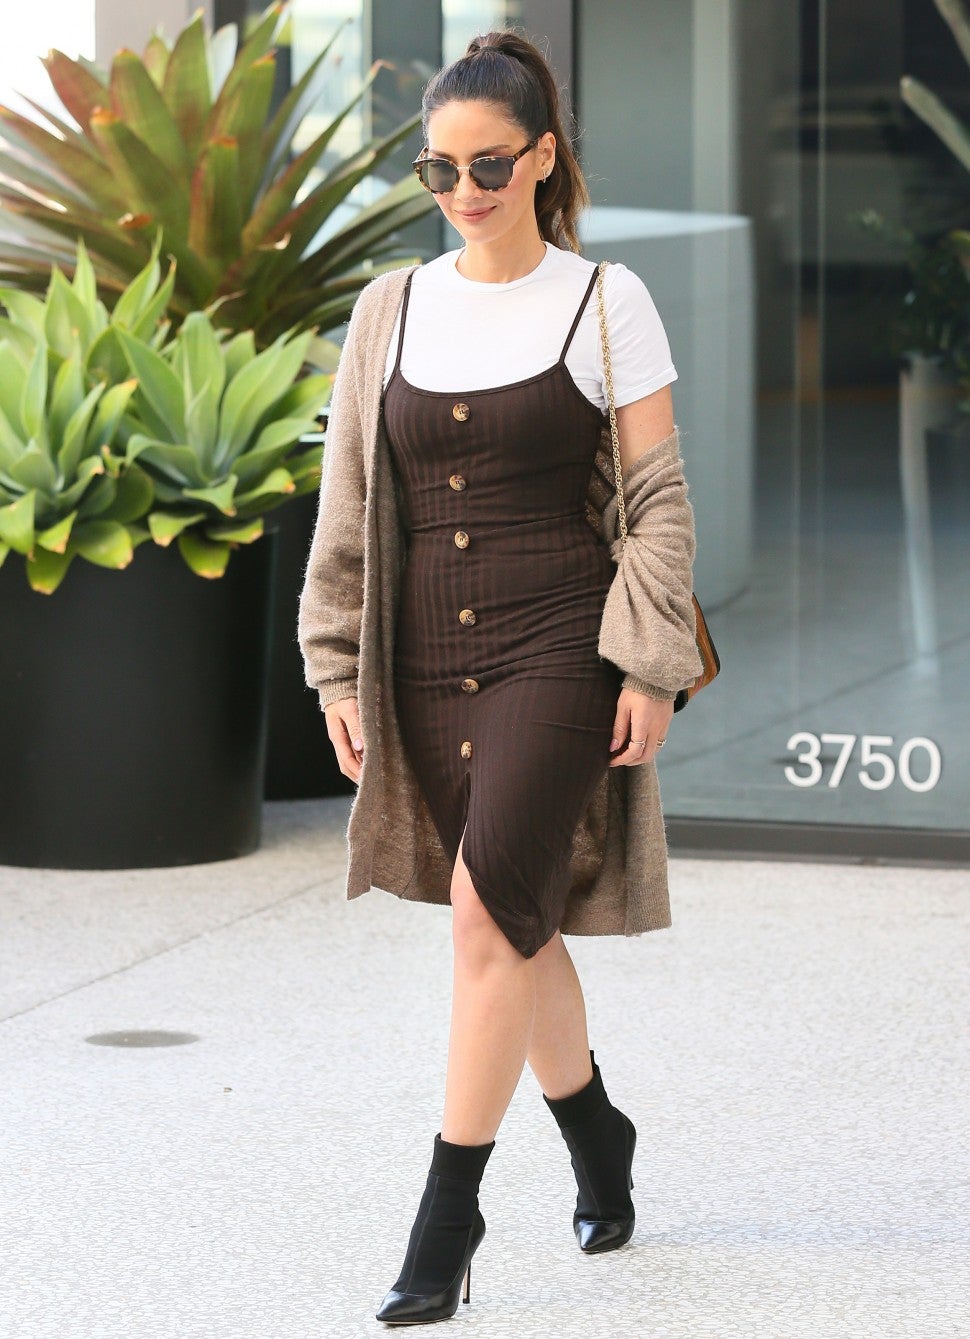 Olivia Munn brown dress, cardigan and boots